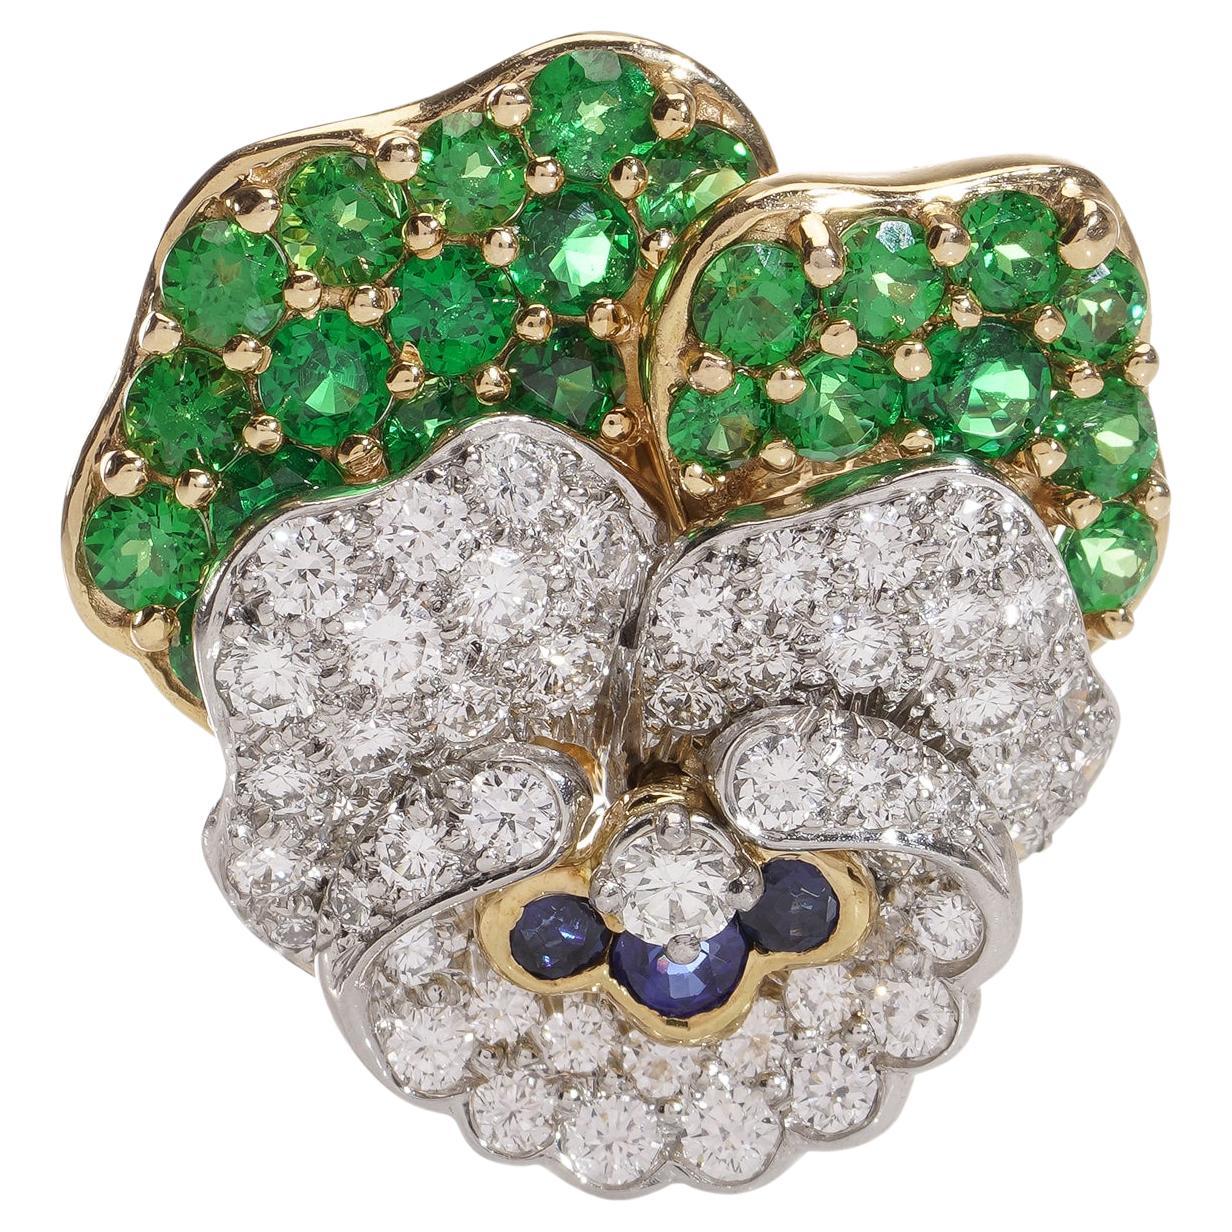 Tiffany & Co. Pansy Brooch with Diamonds, Sapphires, Tsavorite Garnets